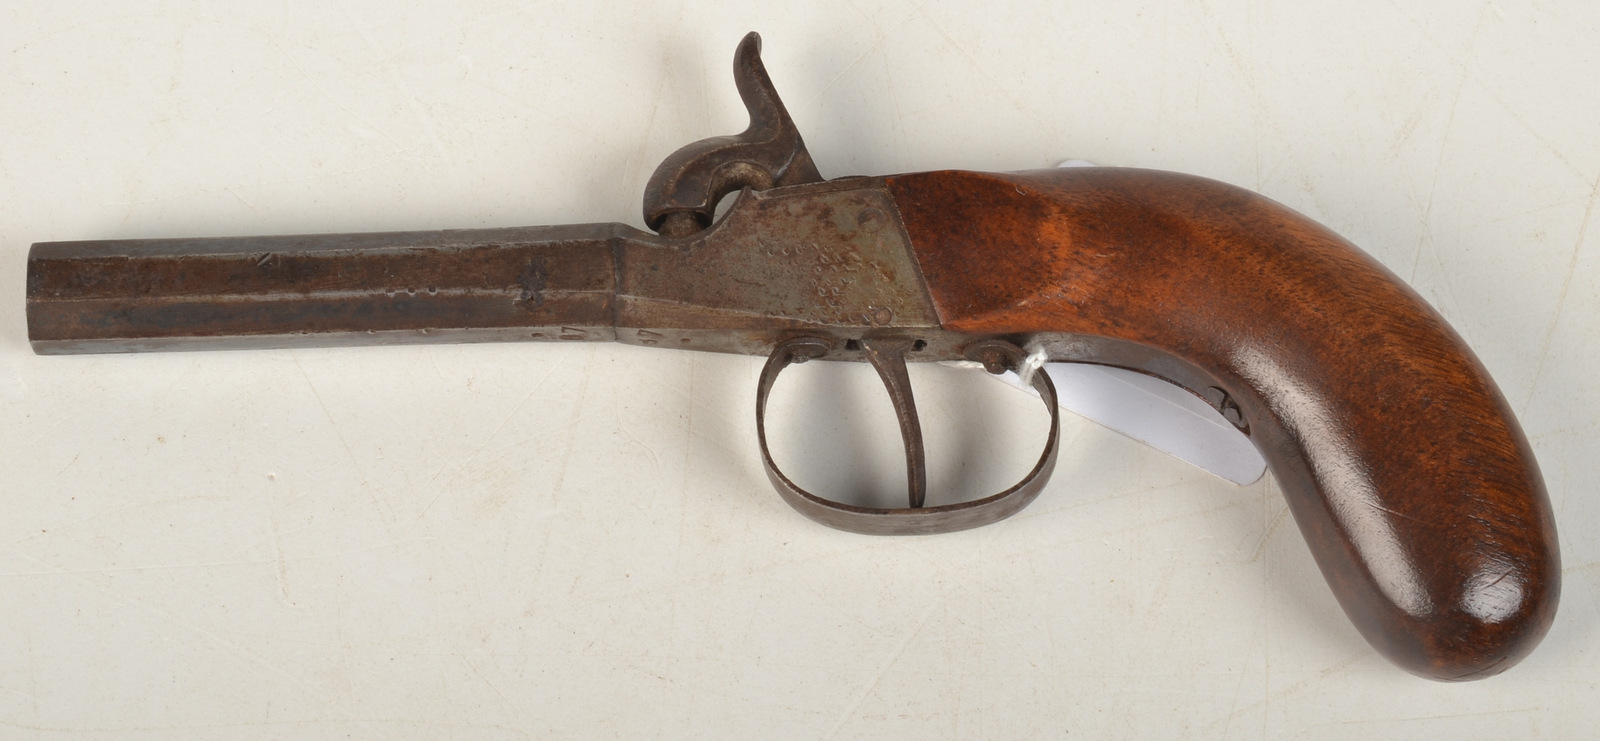 A 19th century box lock pocket pistol with octagonal turn-off barrel and walnut stock.